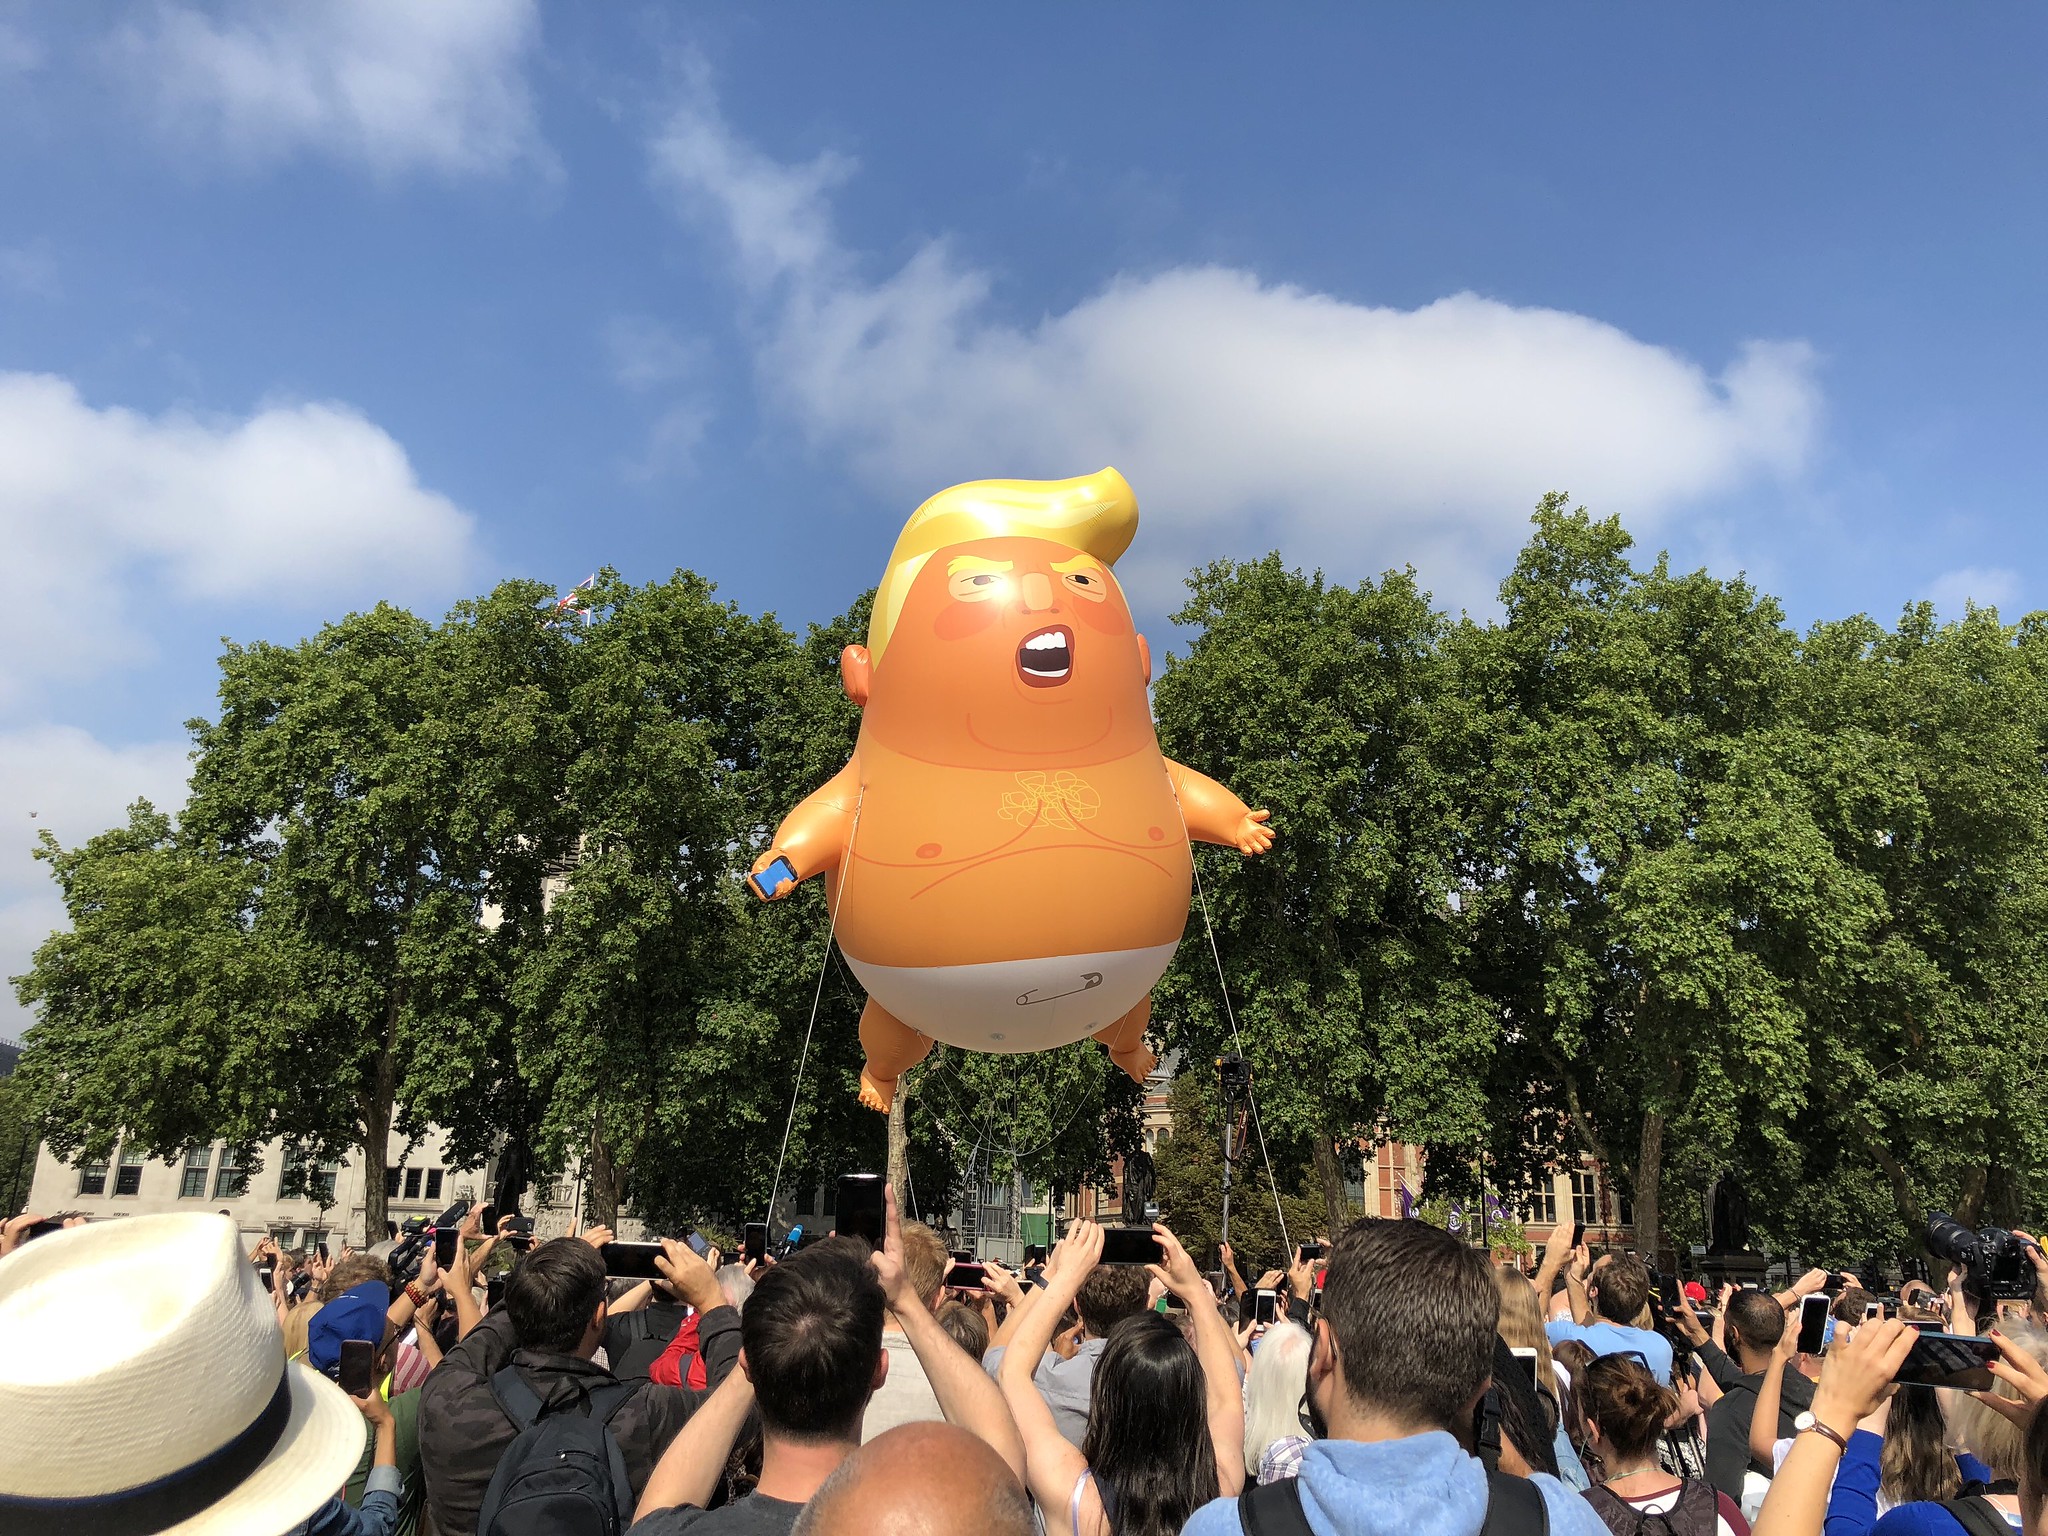 Donald Trump 2018 UK Protest -Blimp Trump Orange Baby Balloon